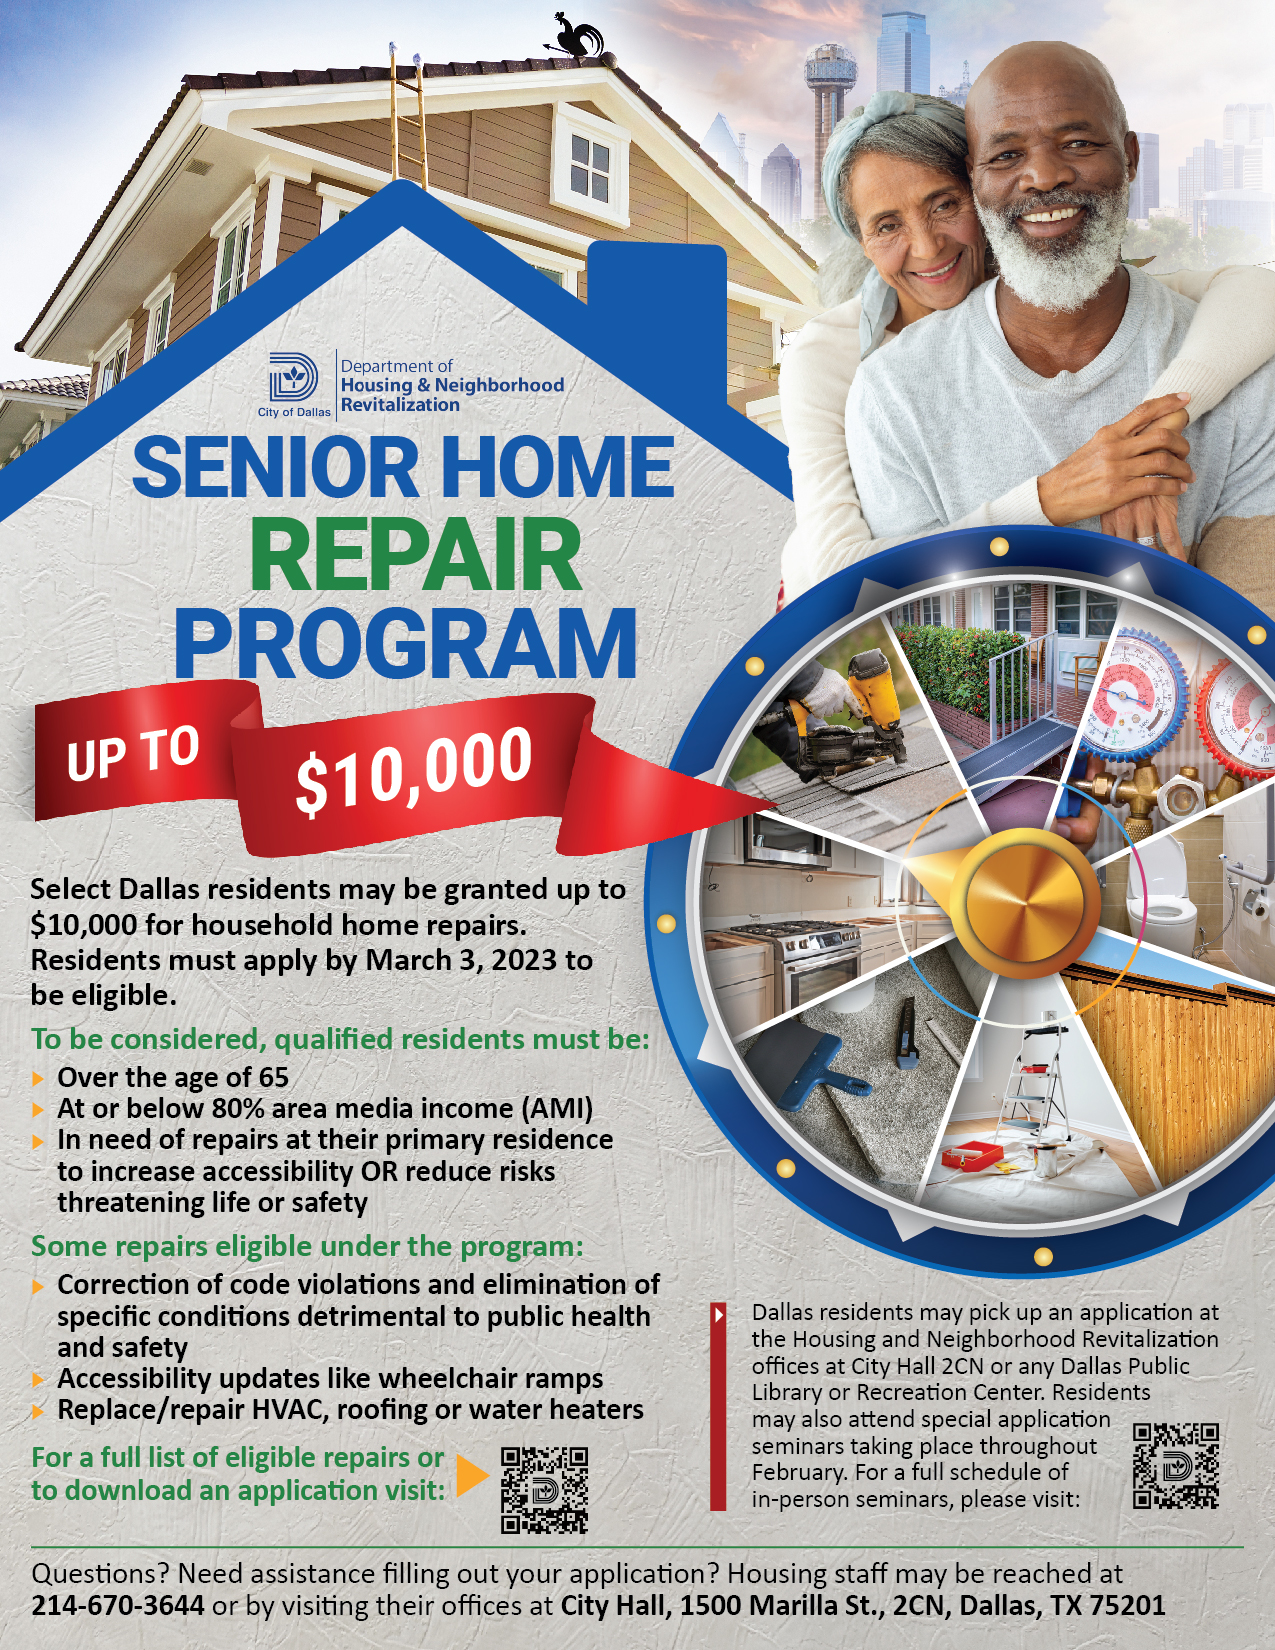 HOU_Marketing Plan for Senior Home Repair Program_English.jpg